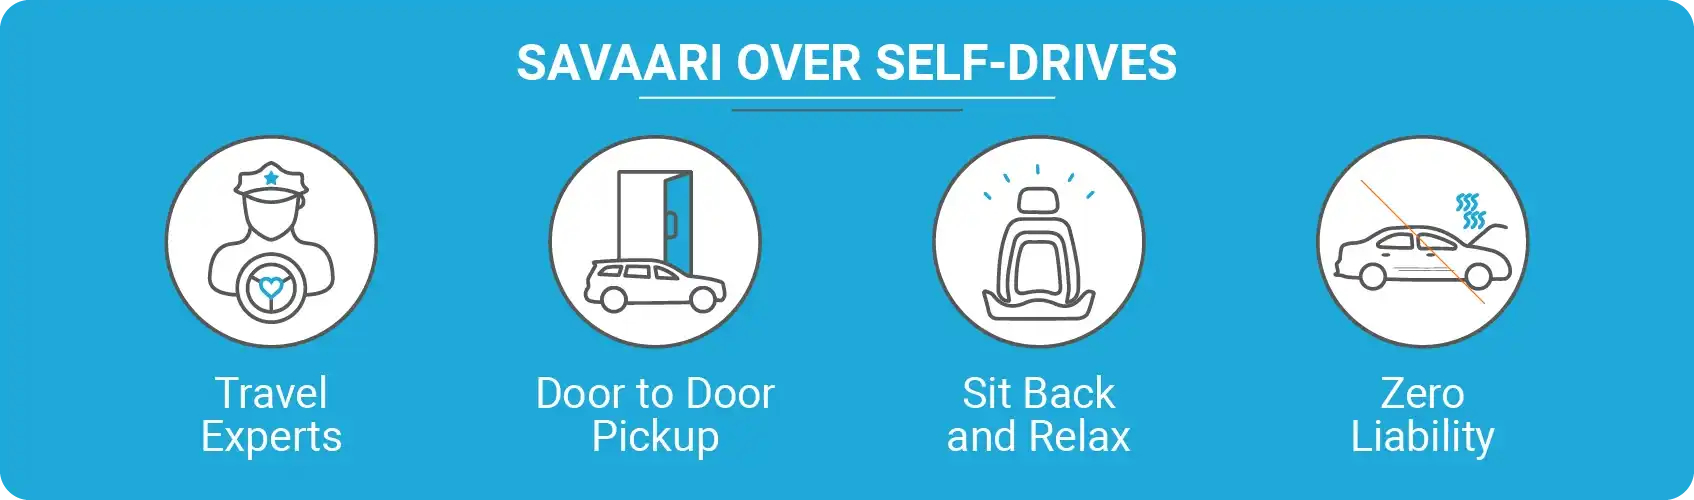 why choose savaari over self-drive